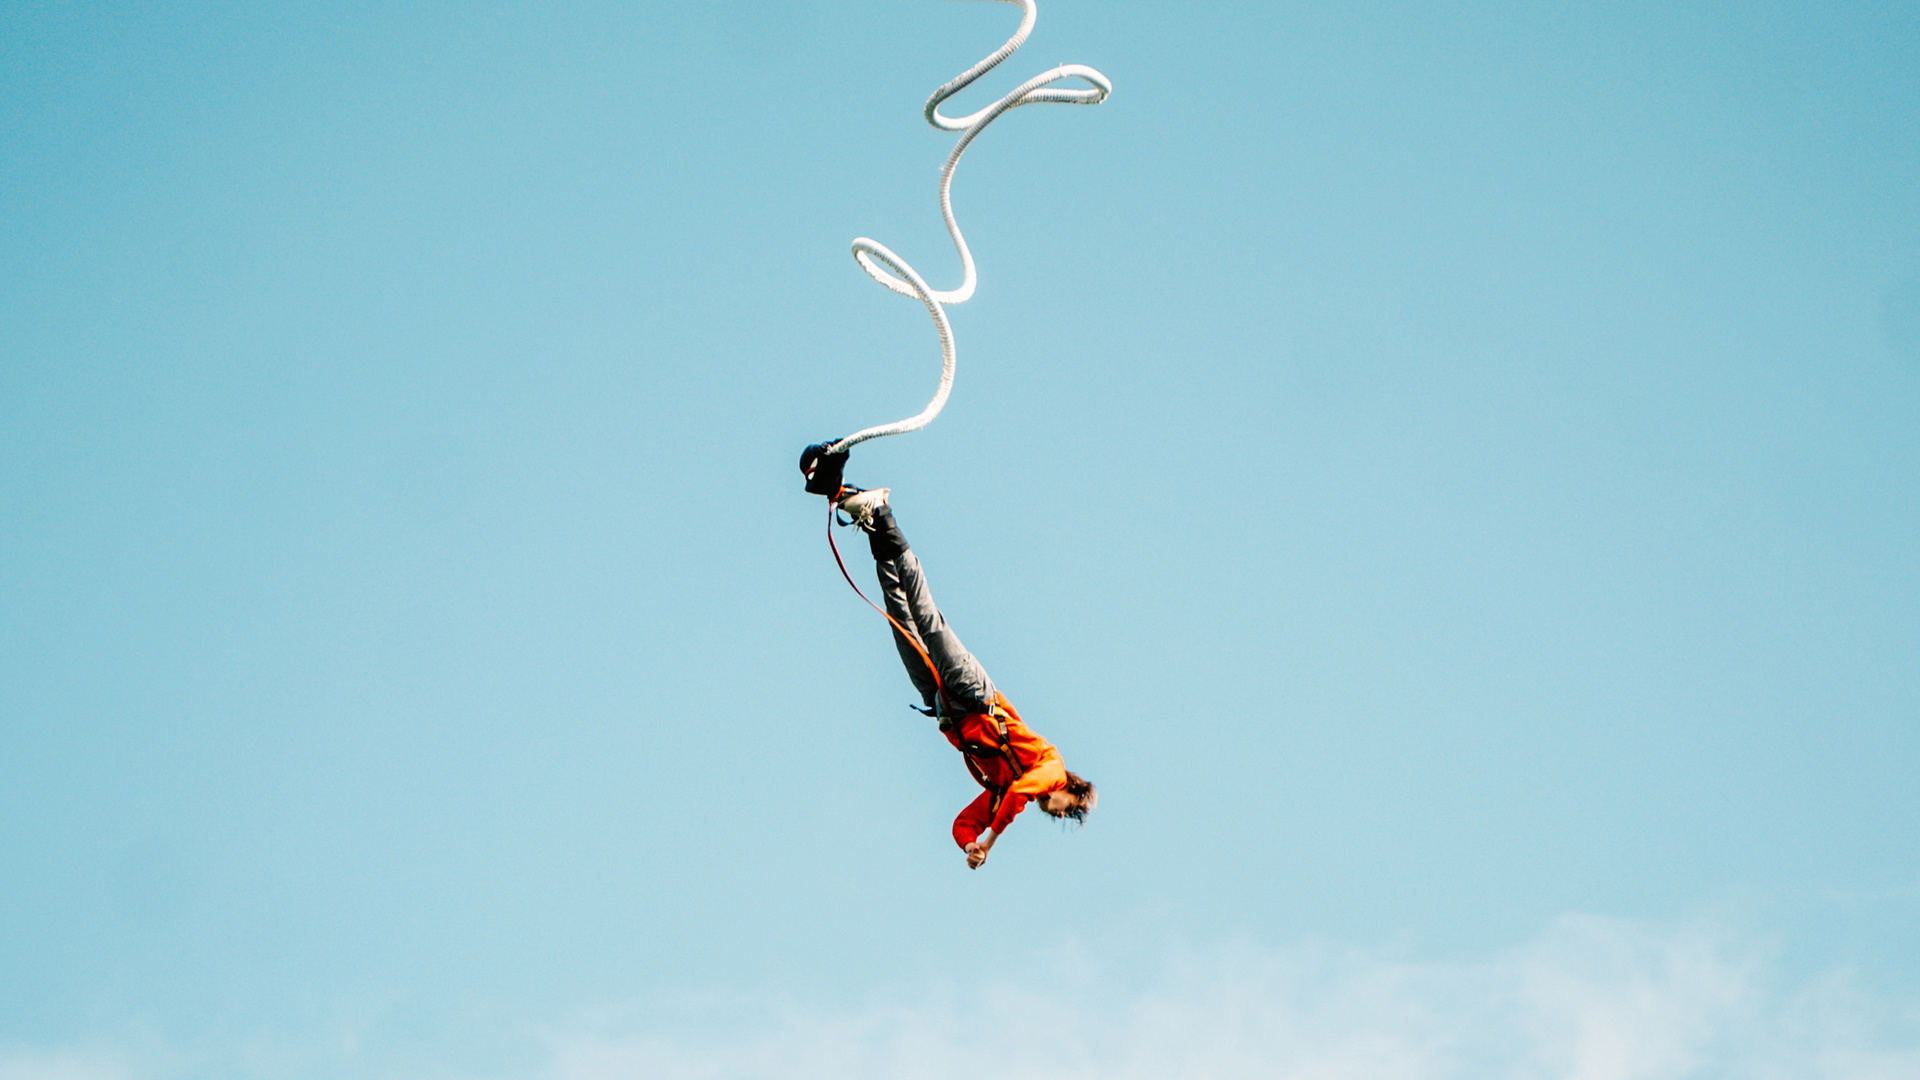 Bungee Jumping: A thrilling free-falling activity in Mountopolis Mayrhofner Bergbahnen resort, Austria. 1920x1080 Full HD Wallpaper.